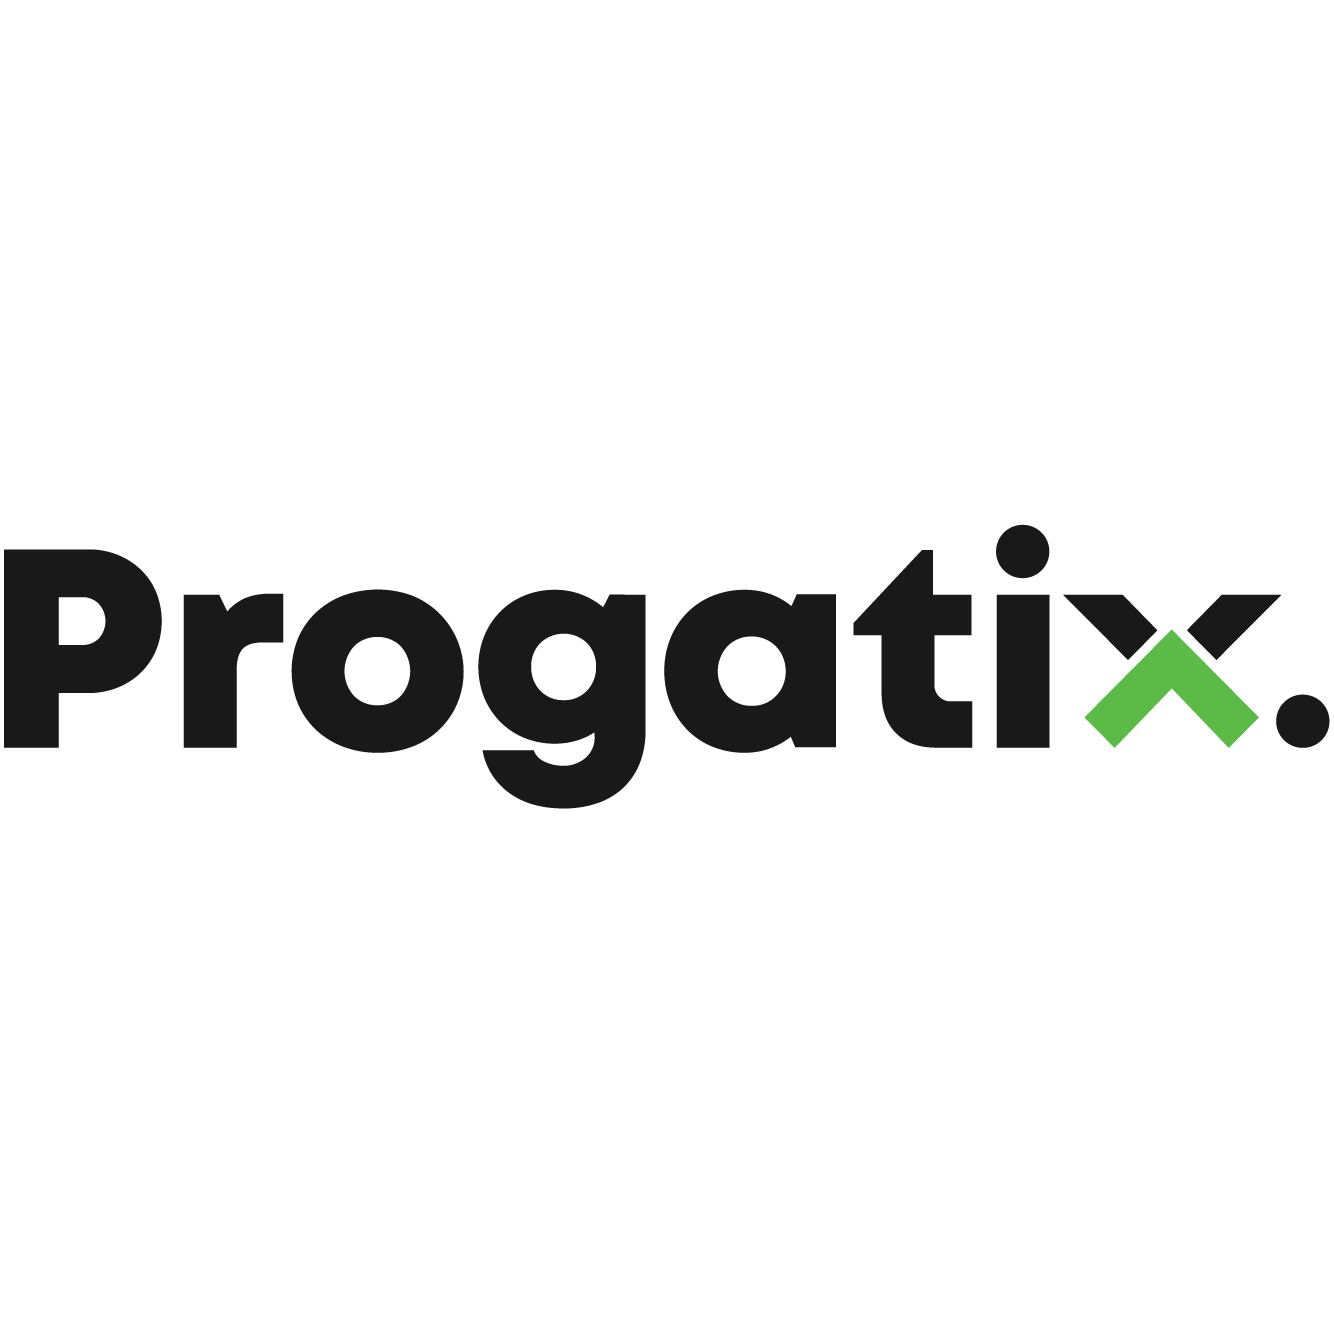 Progatix